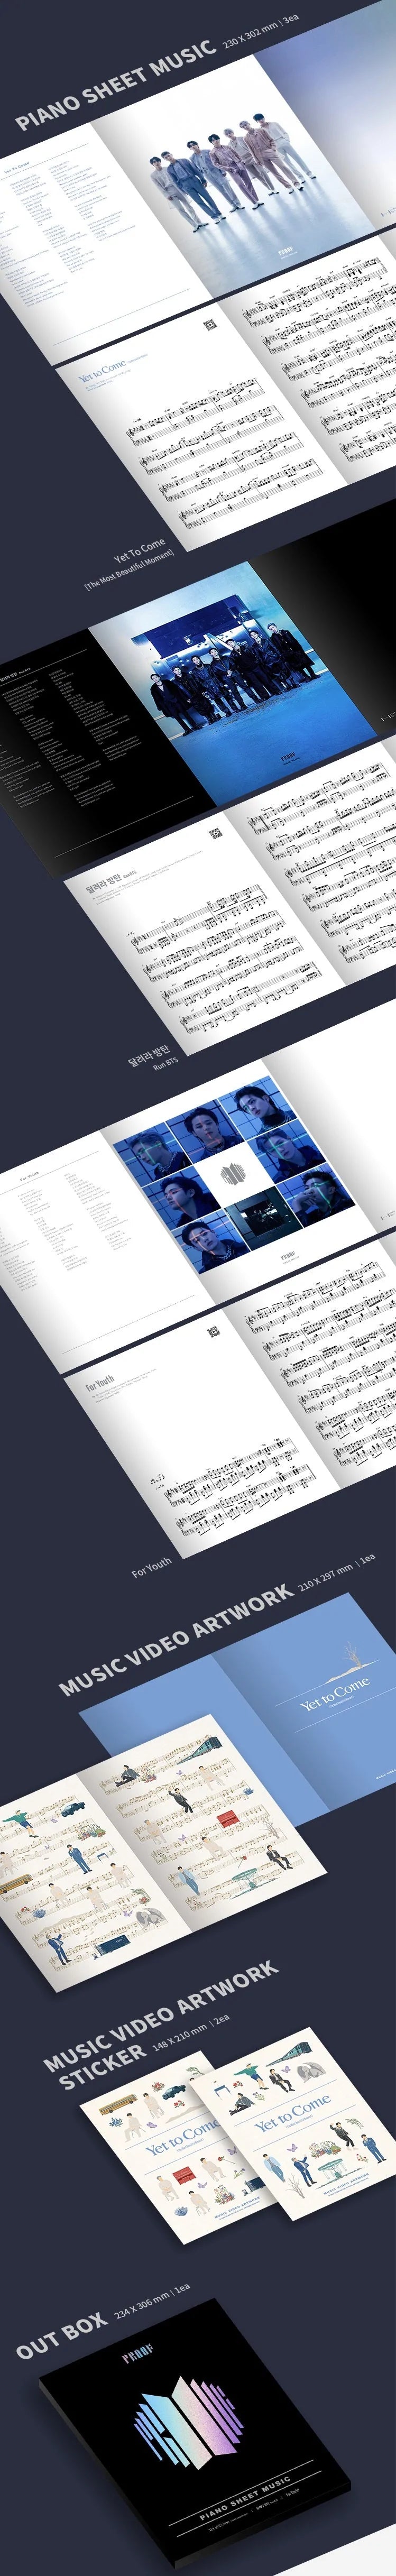 BTS - Piano Sheet Music Vol. 2 [PROOF]